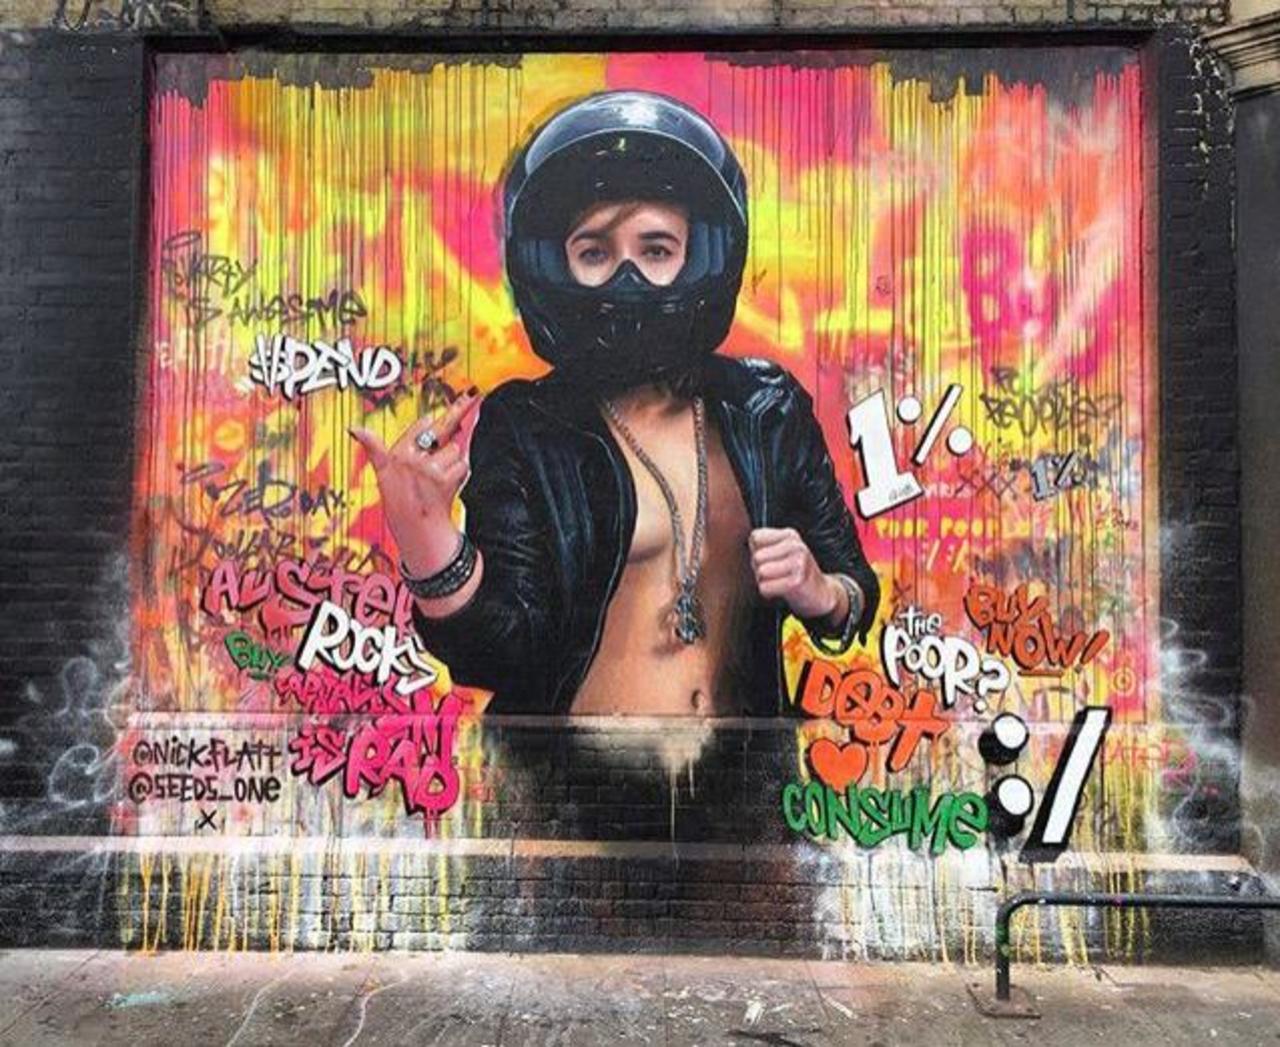 RT belilac "New Street Art collab by Nick Flatt &  Seeds One in London 

#art #graffiti #mural #streetart http://t.co/bJTyyi6AXq"